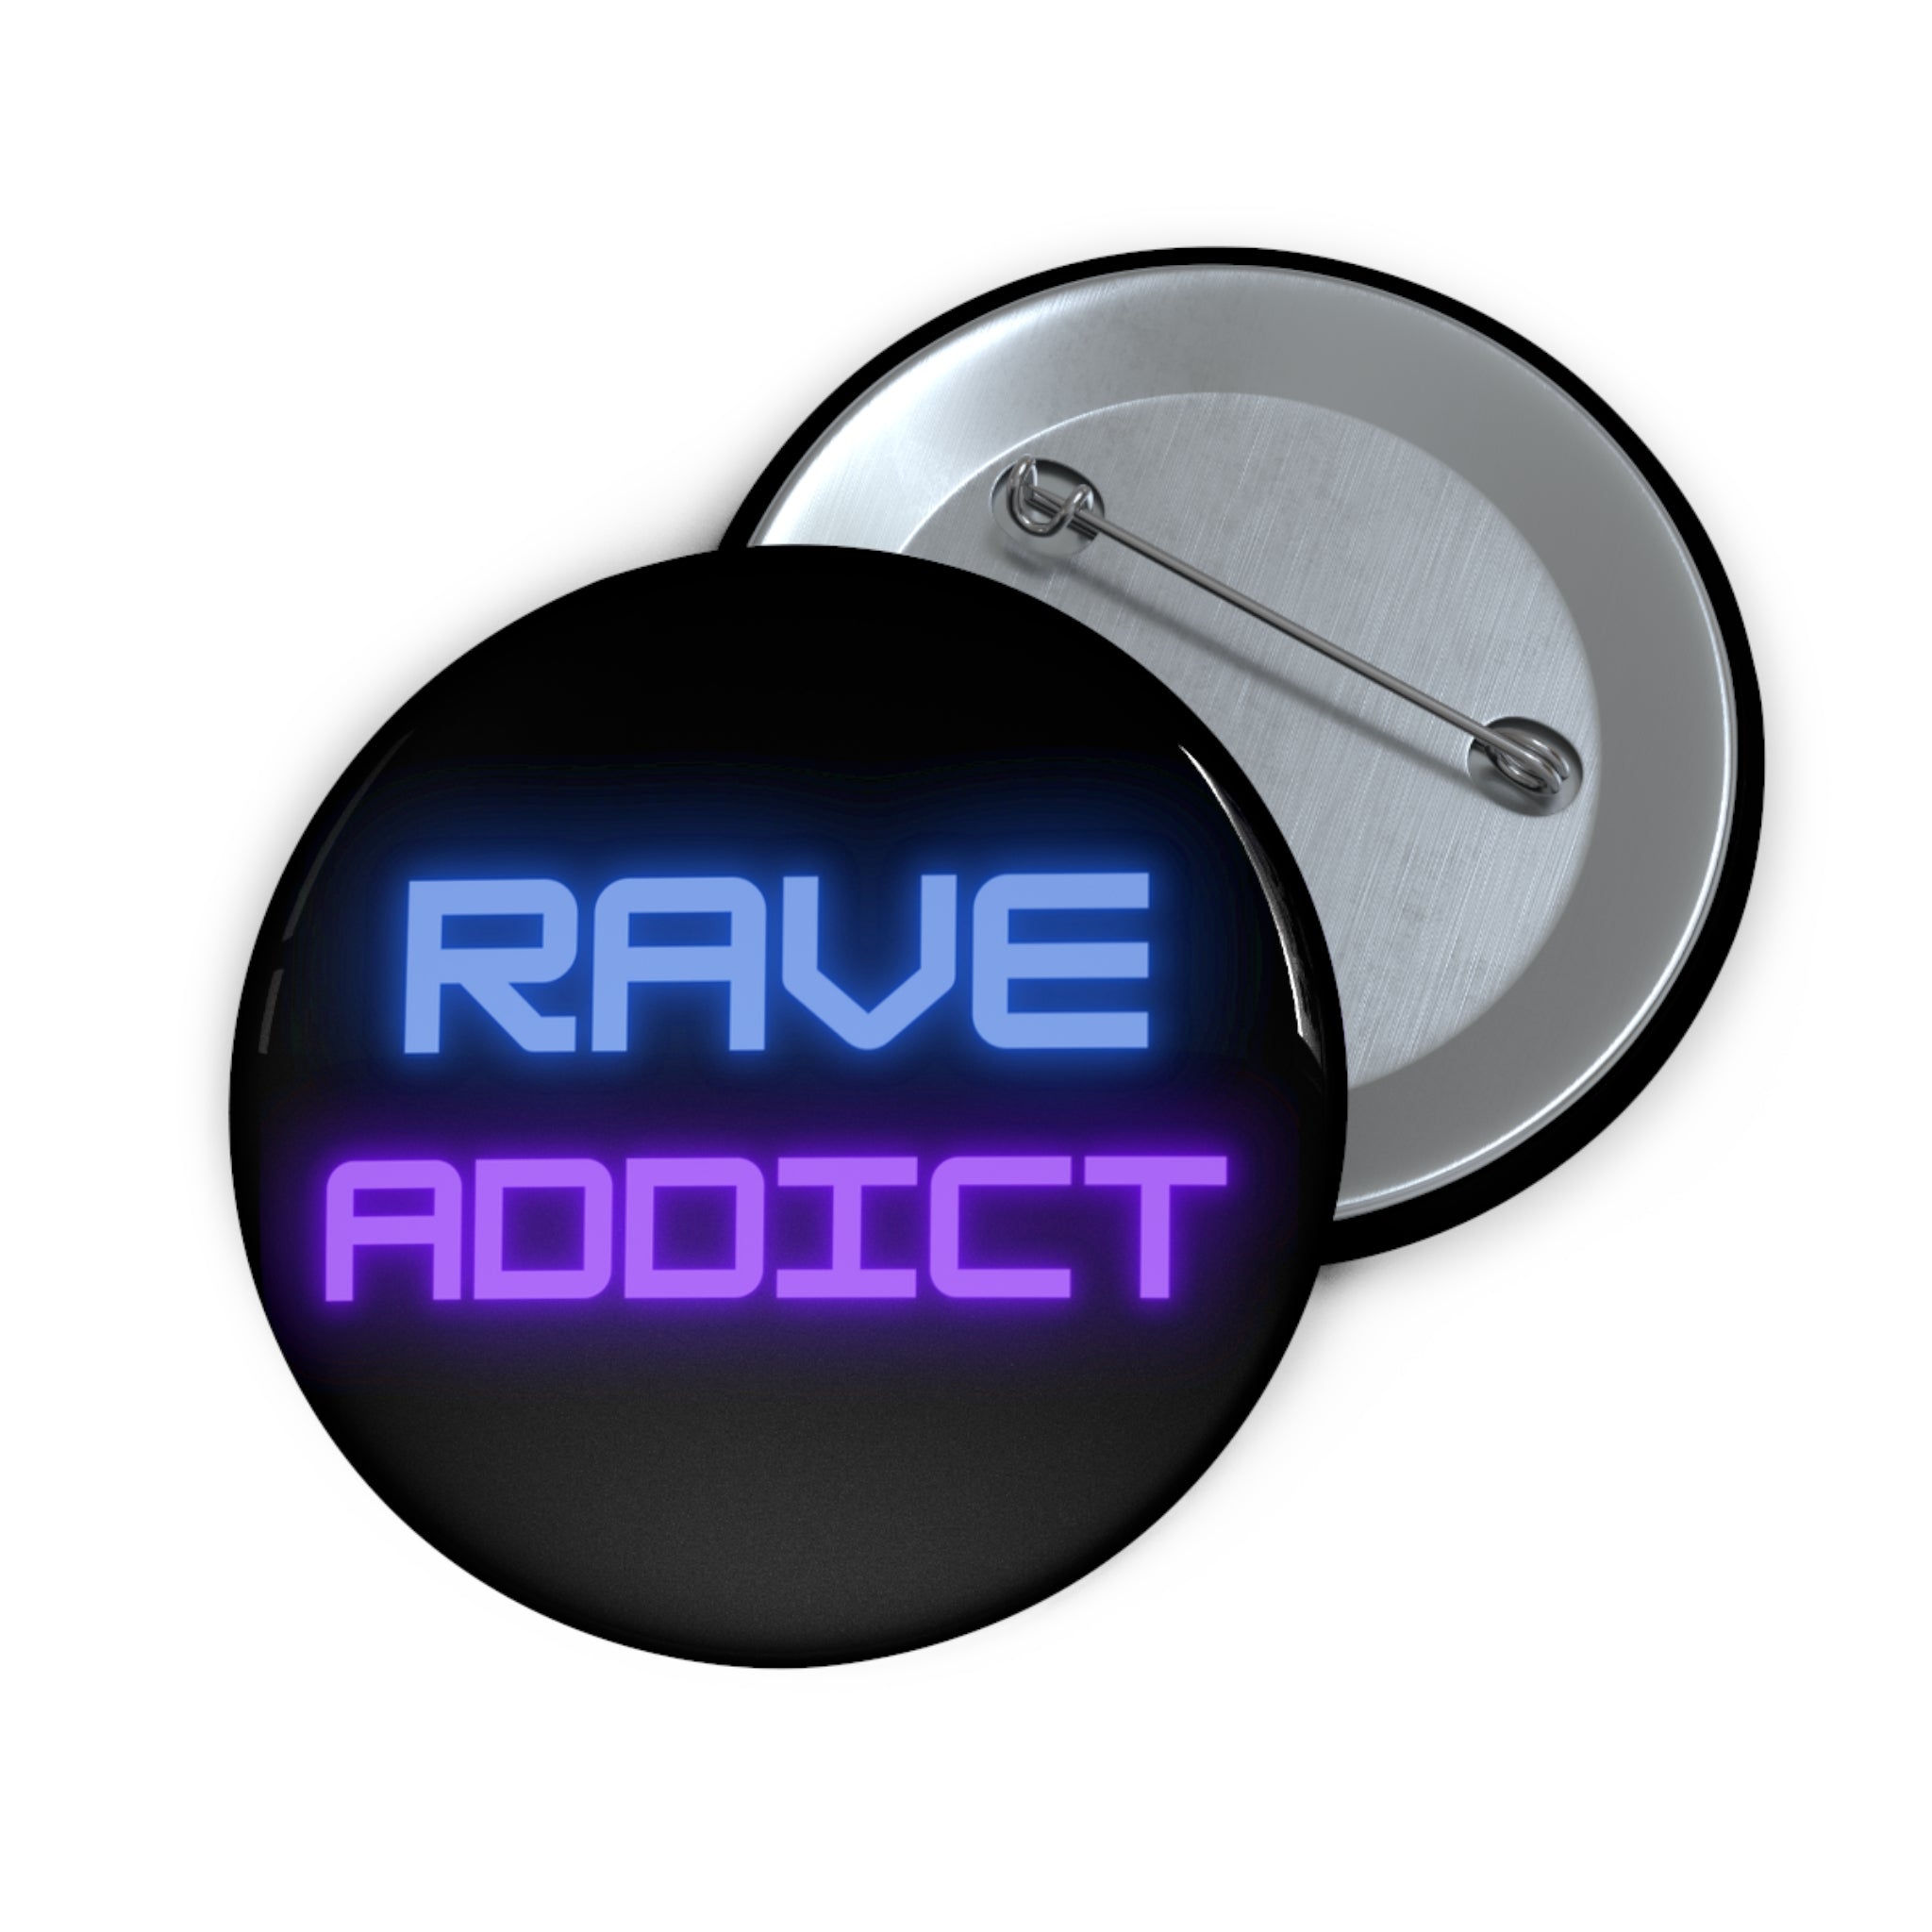 Rave Addict Pin Button